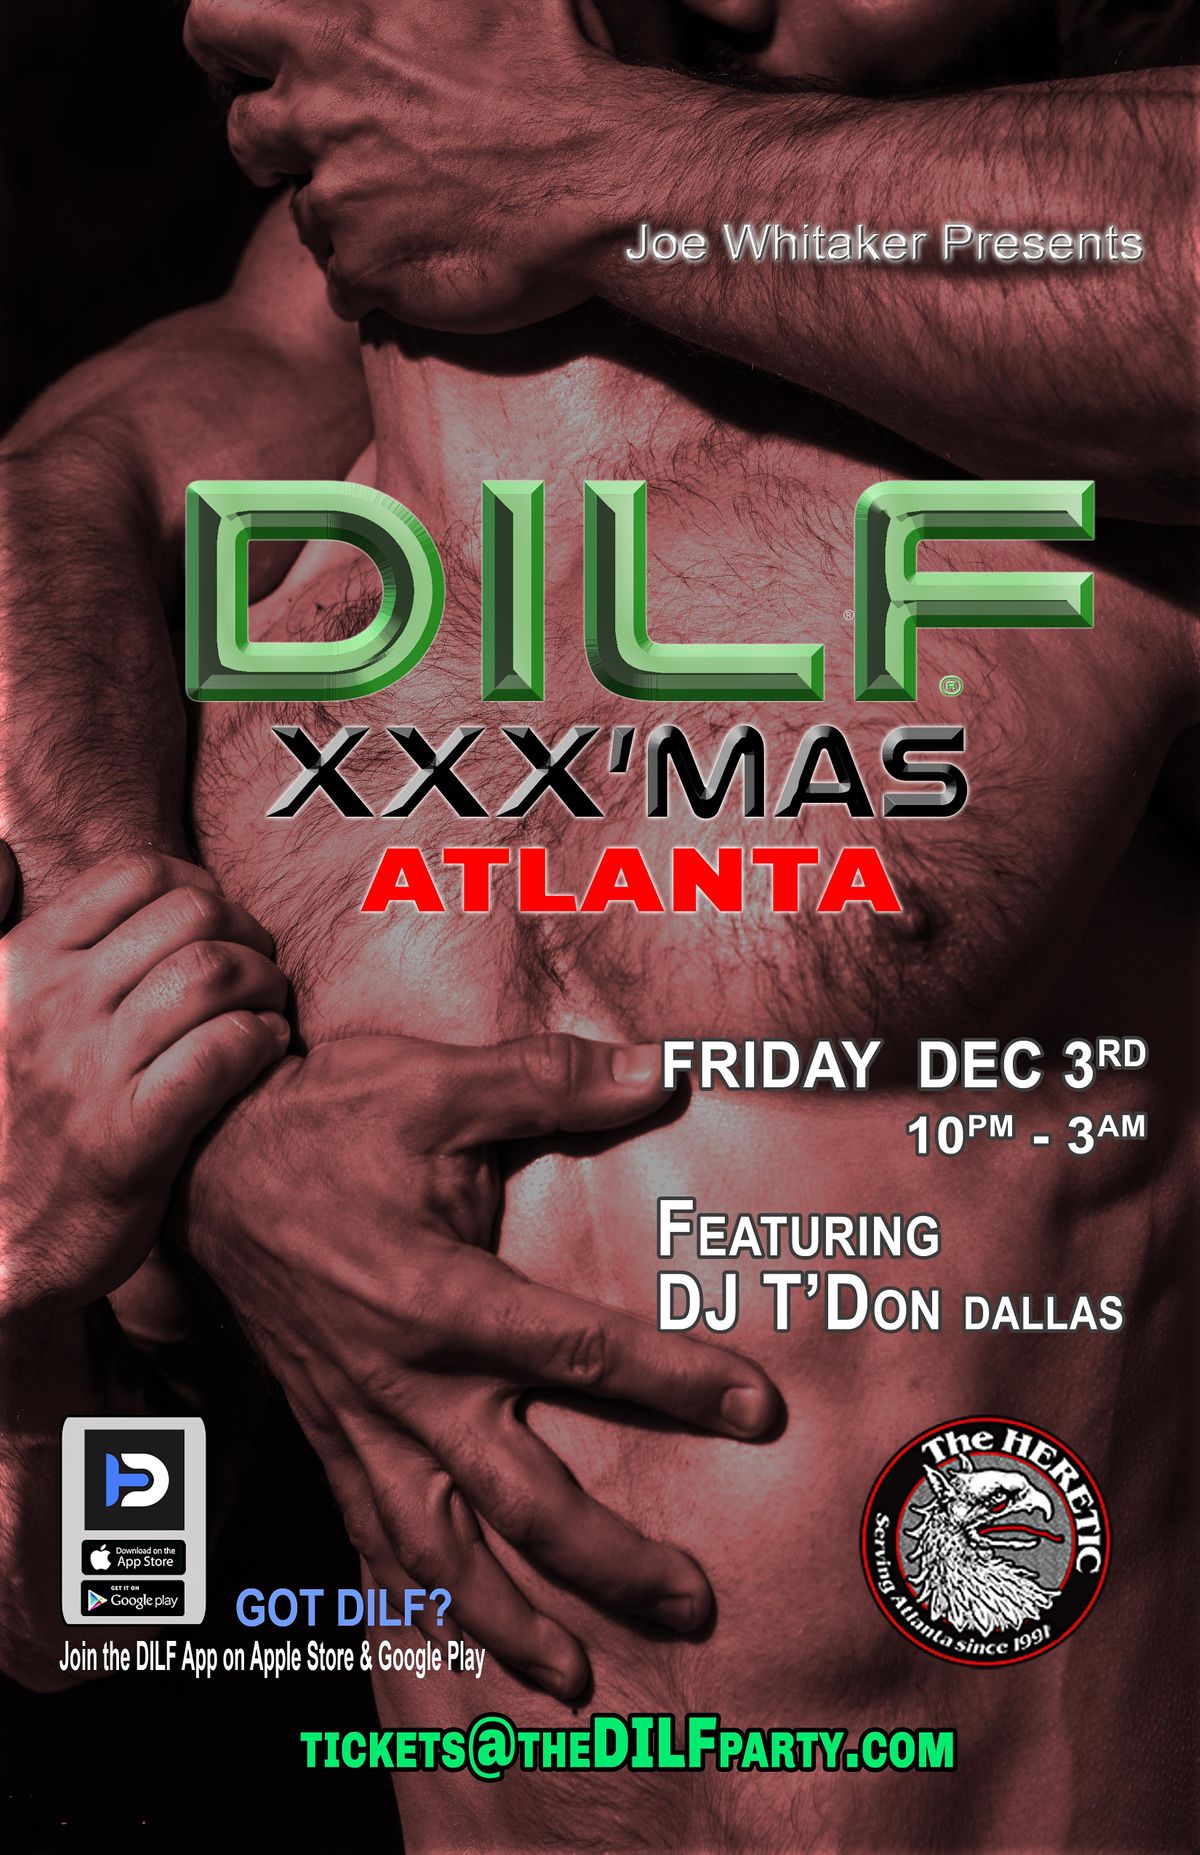 DILF Atlanta "XXX'mas" Party by Joe Whitaker Presents